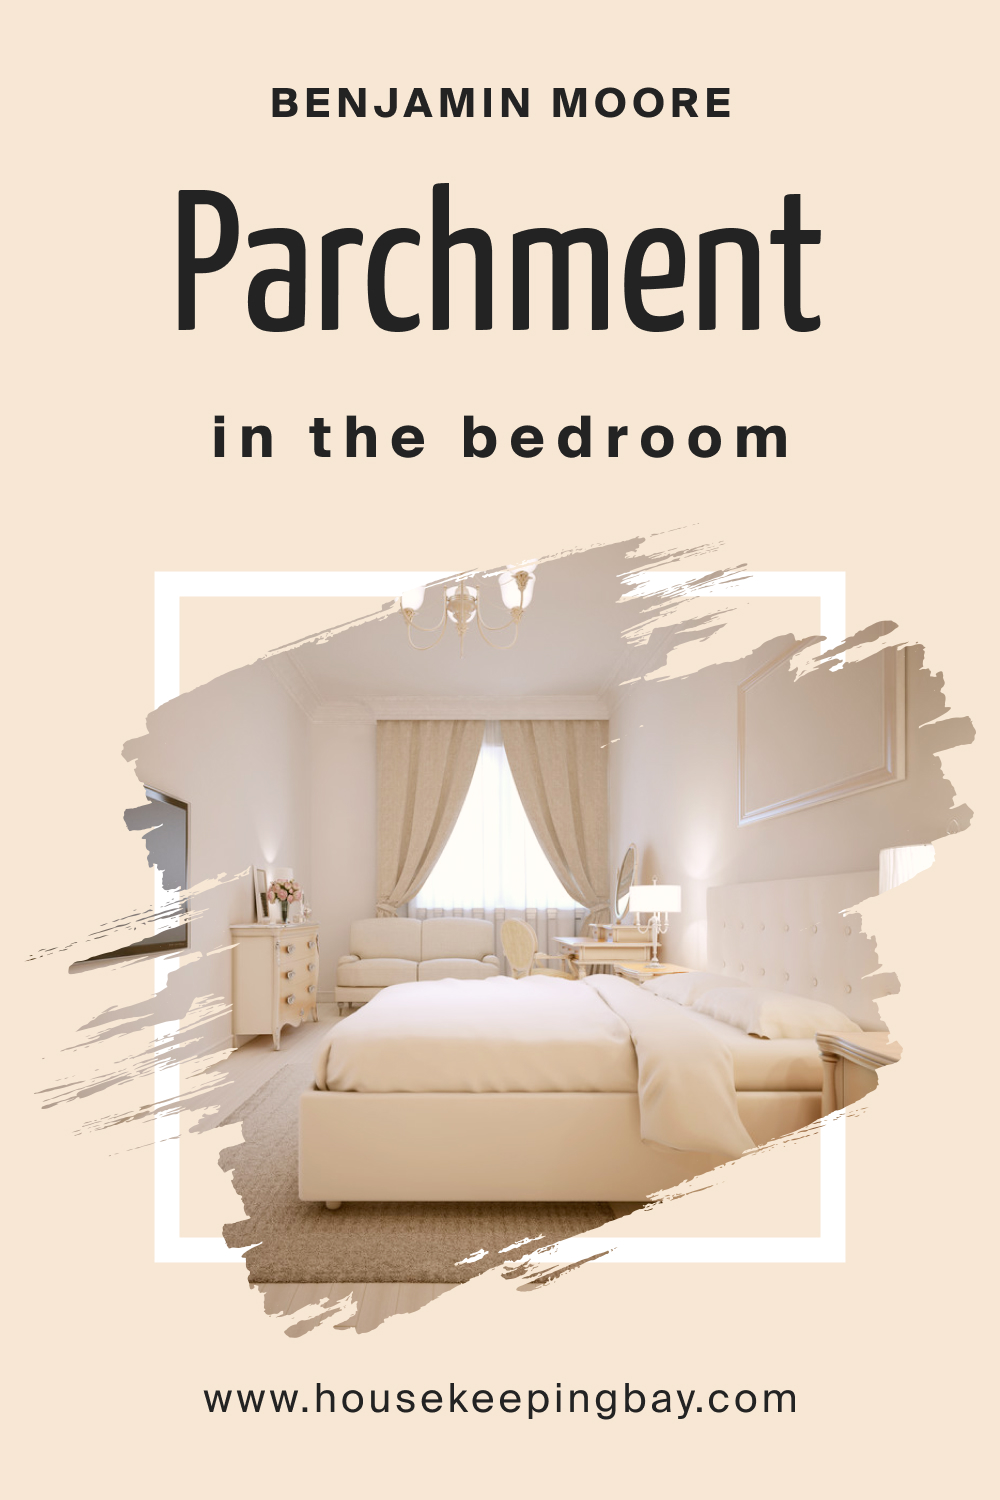 Benjamin Moore. Parchment OC 78 for the Bedroom